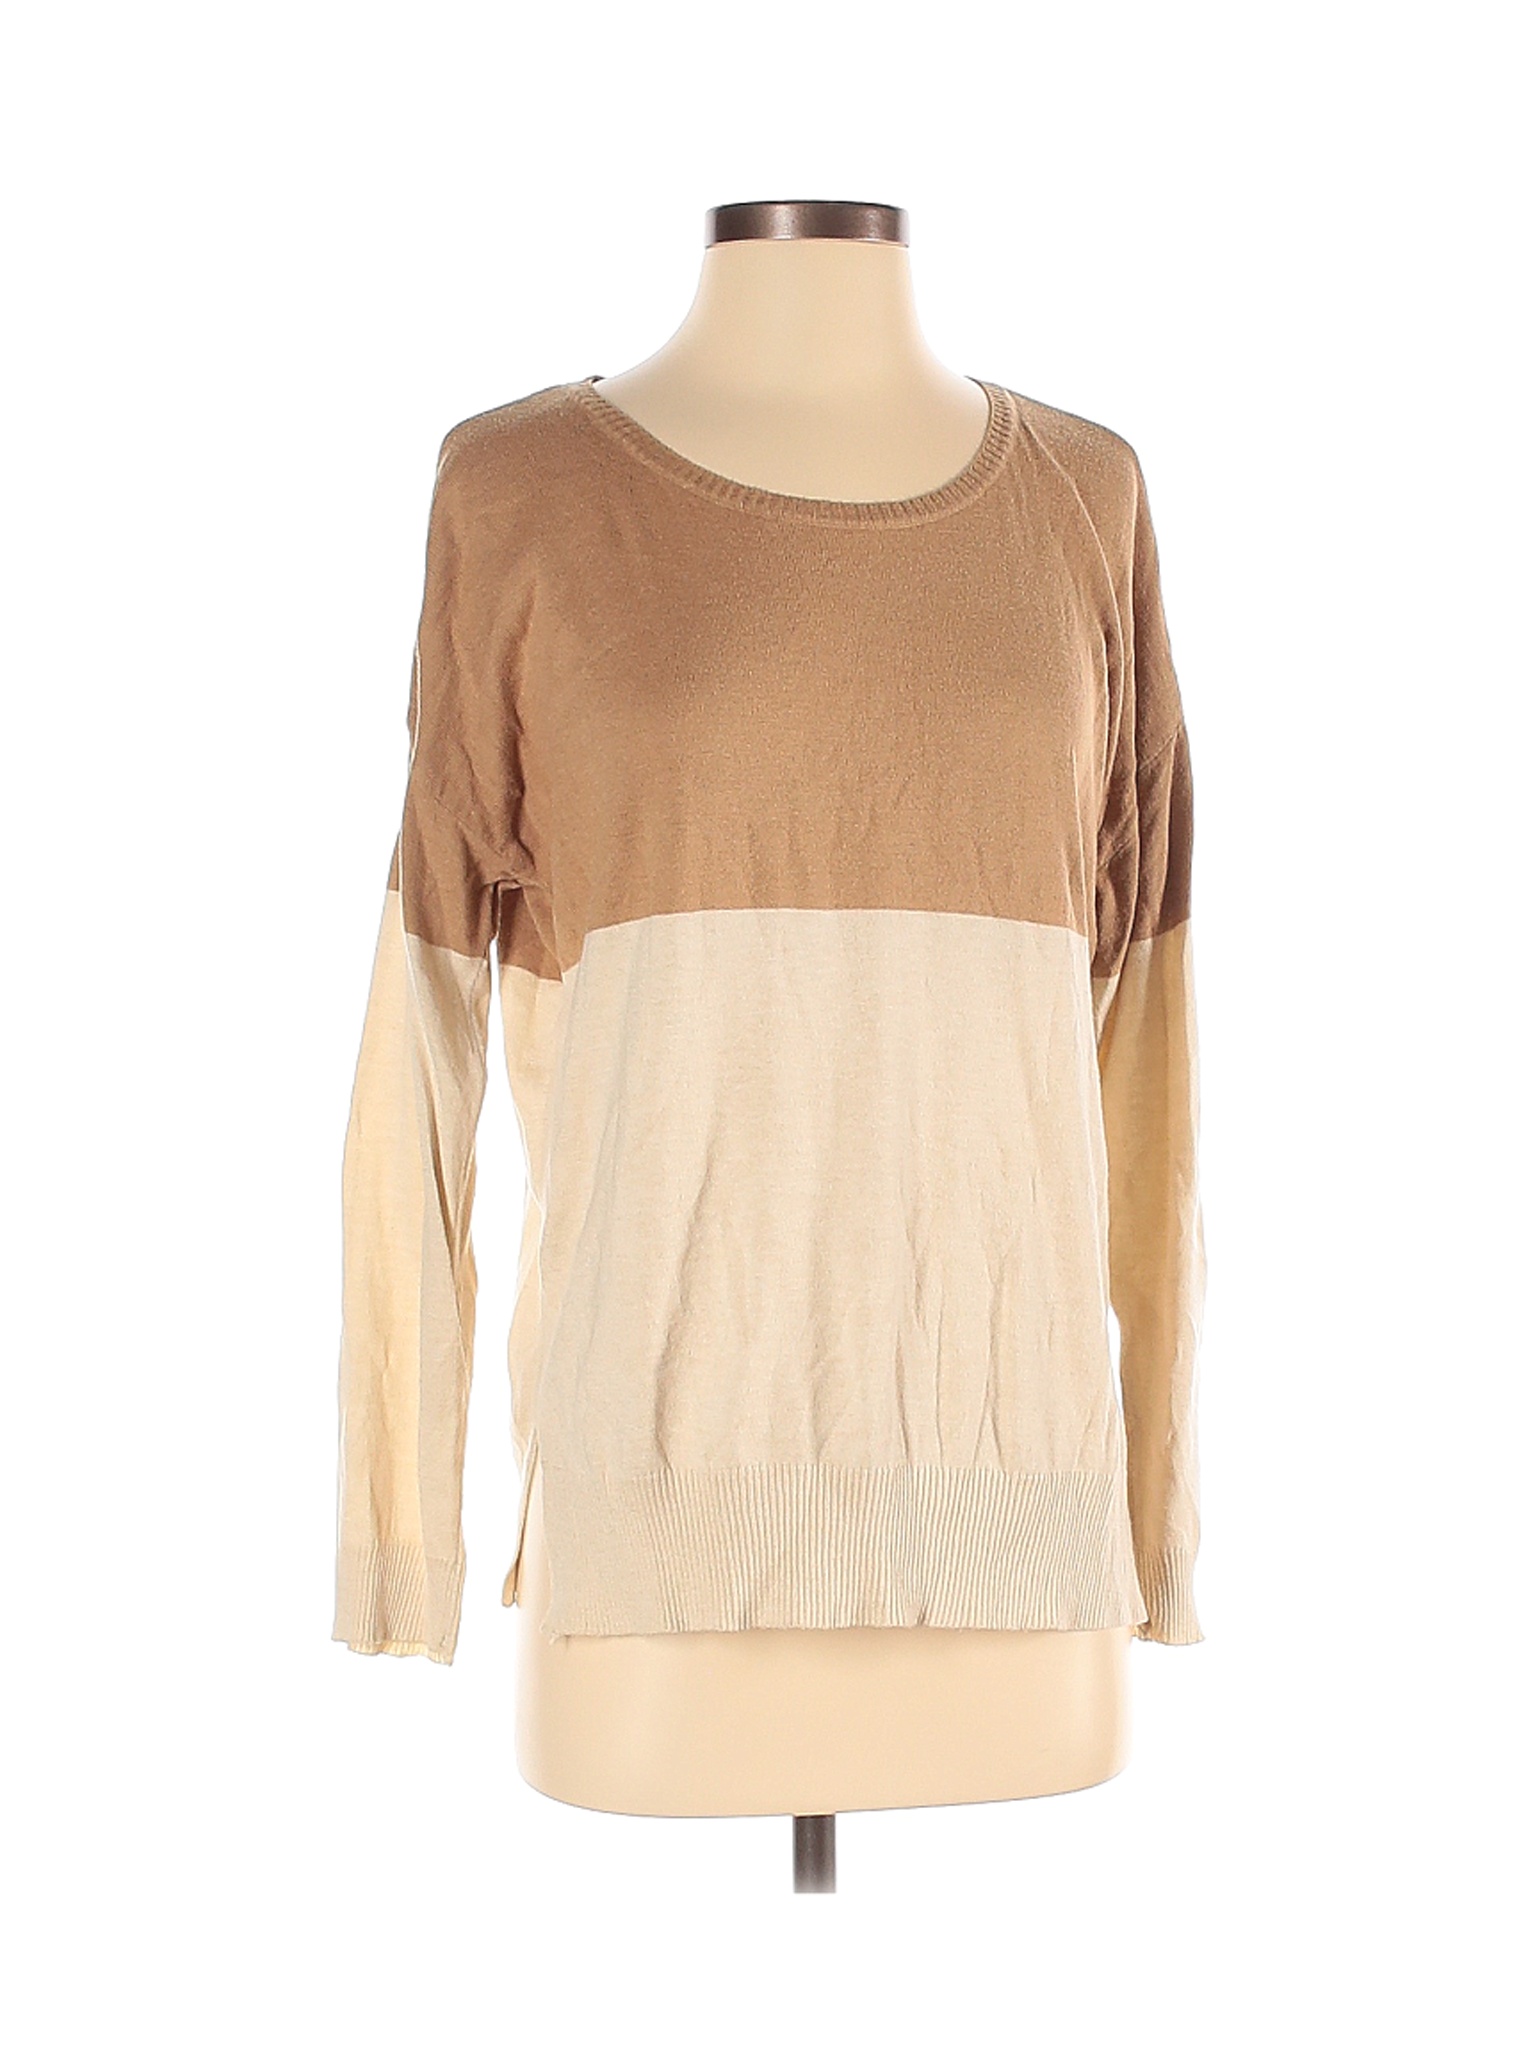 Zara Women Brown Pullover Sweater M | eBay